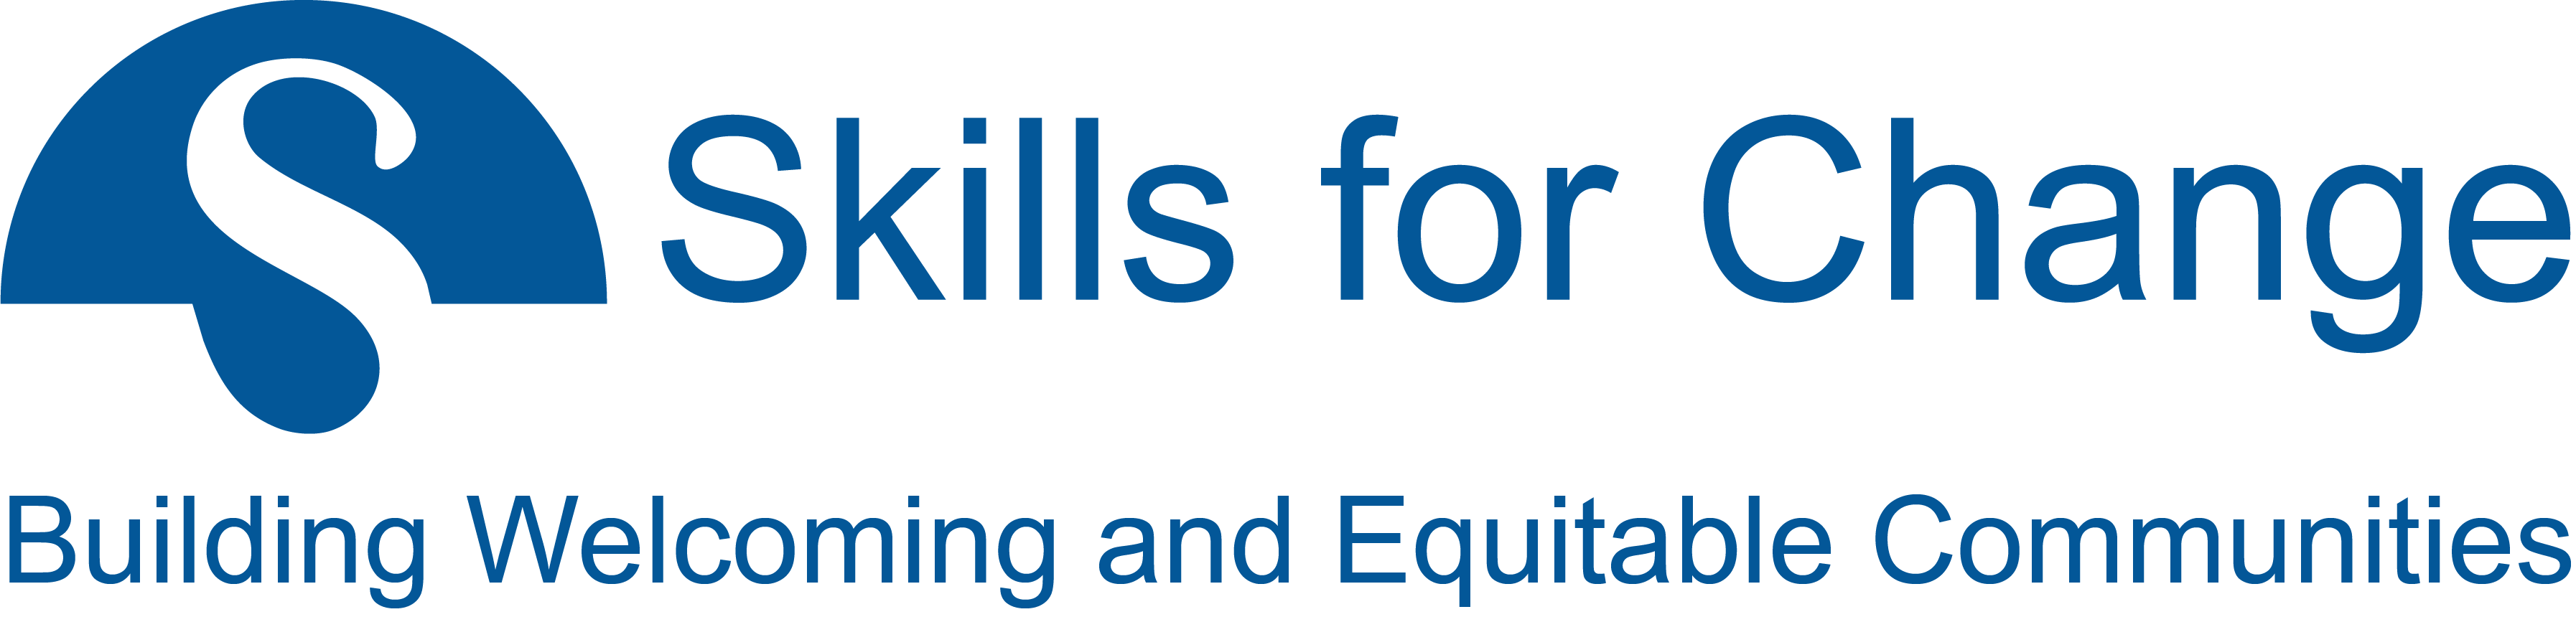 skills-for-change-logo